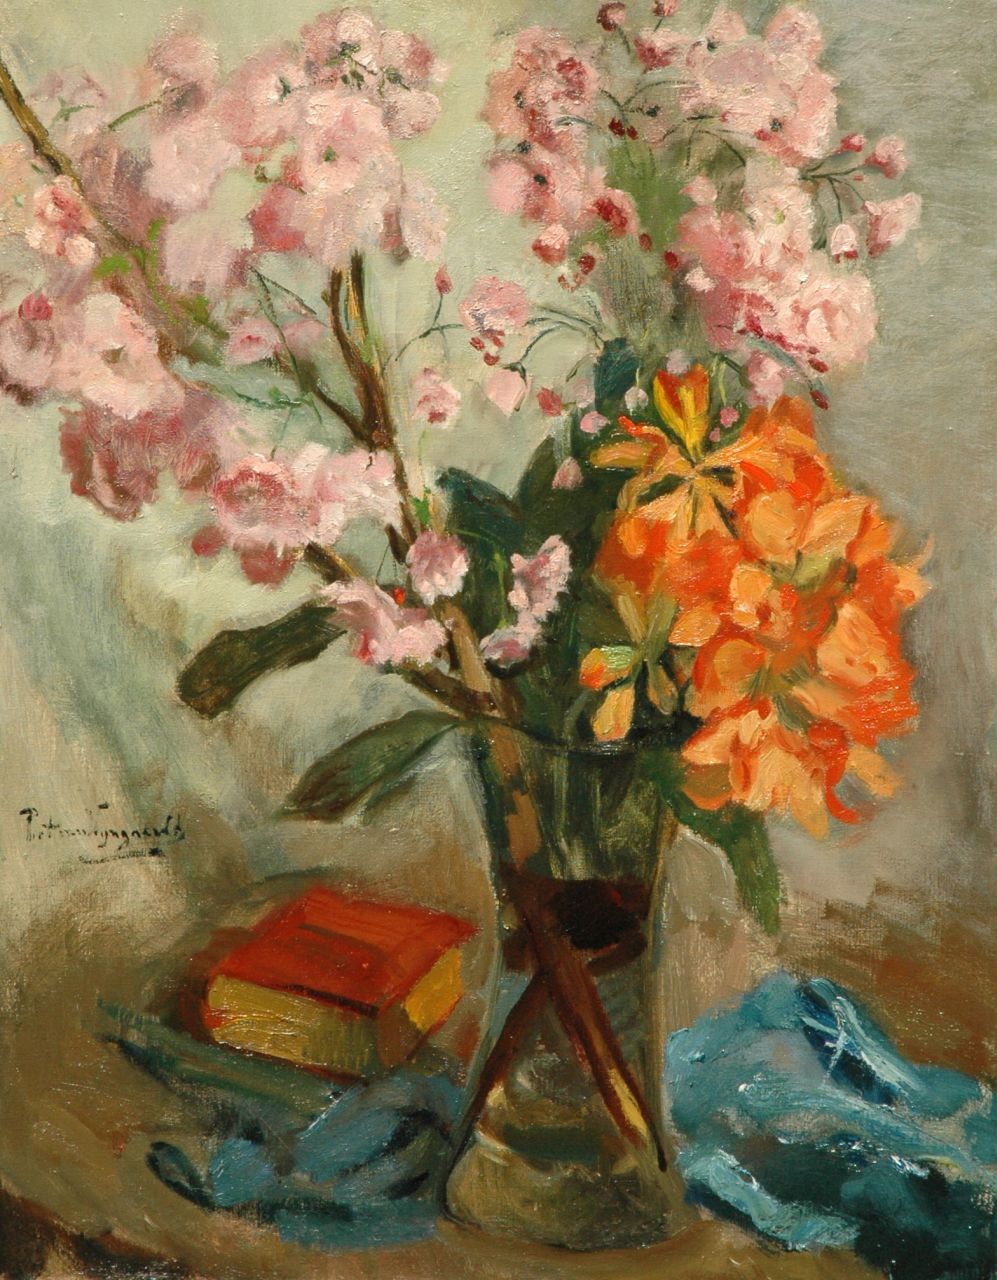 Wijngaerdt P.T. van | Petrus Theodorus 'Piet' van Wijngaerdt, Cherry blossom and azalea in a vase, Öl auf Leinwand 90,5 x 70,5 cm, signed m.l. and on the reverse